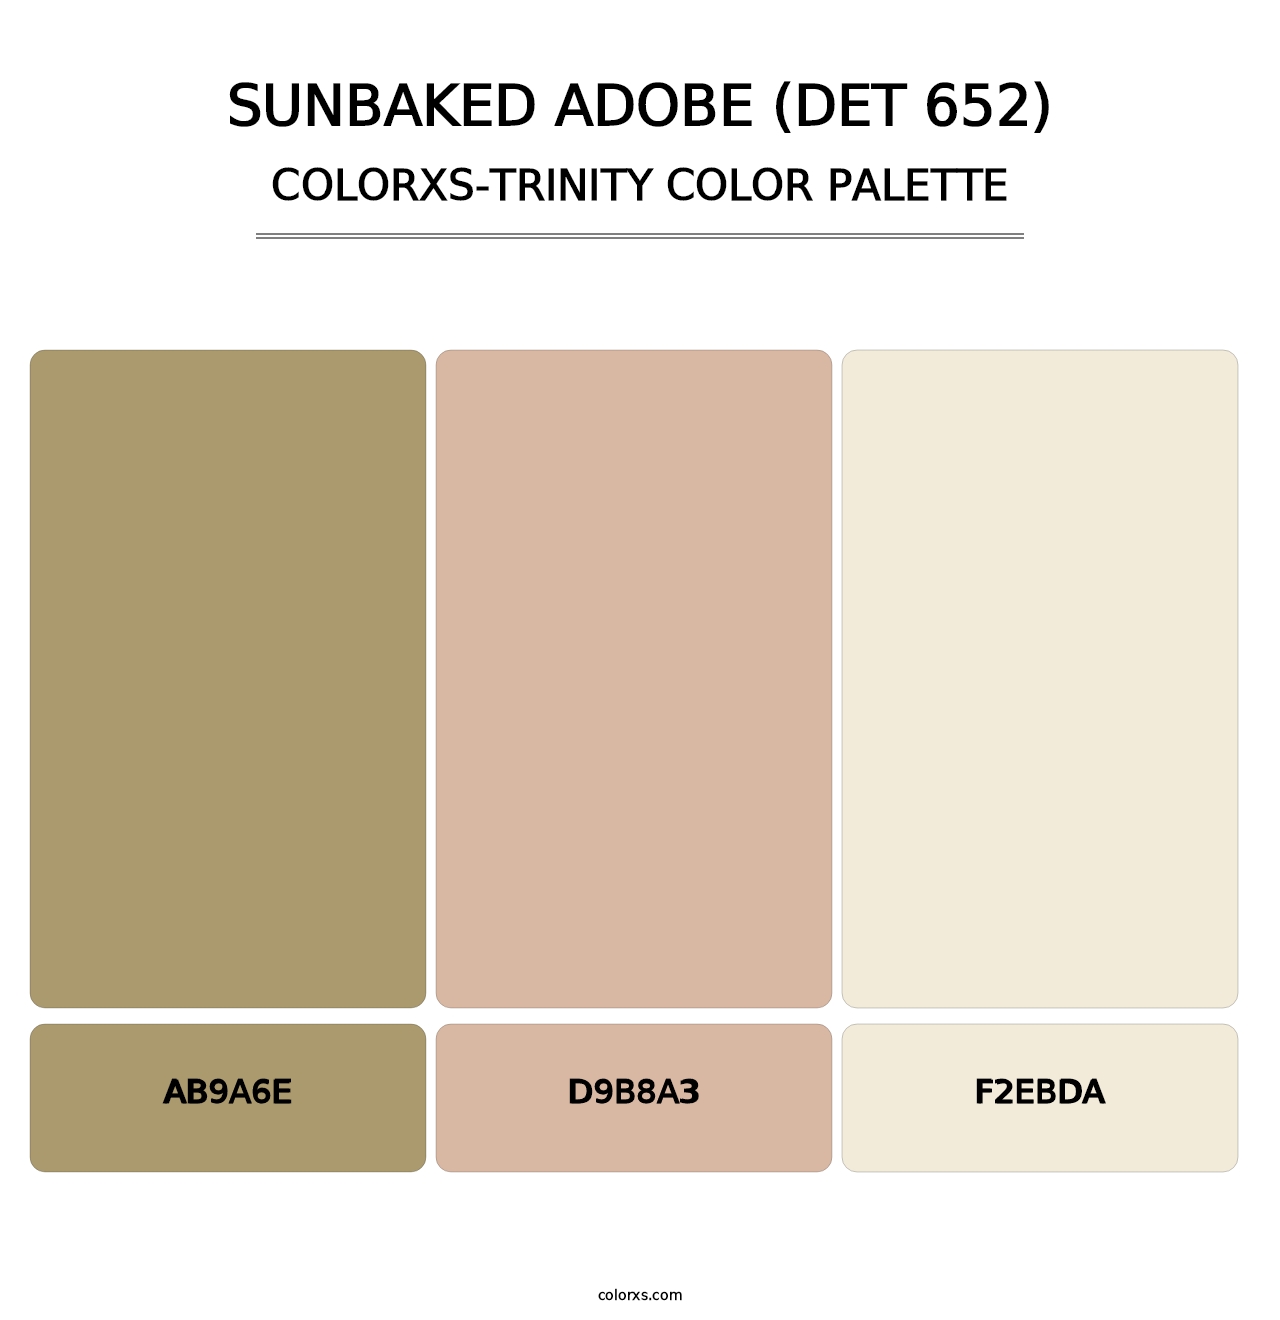 Sunbaked Adobe (DET 652) - Colorxs Trinity Palette